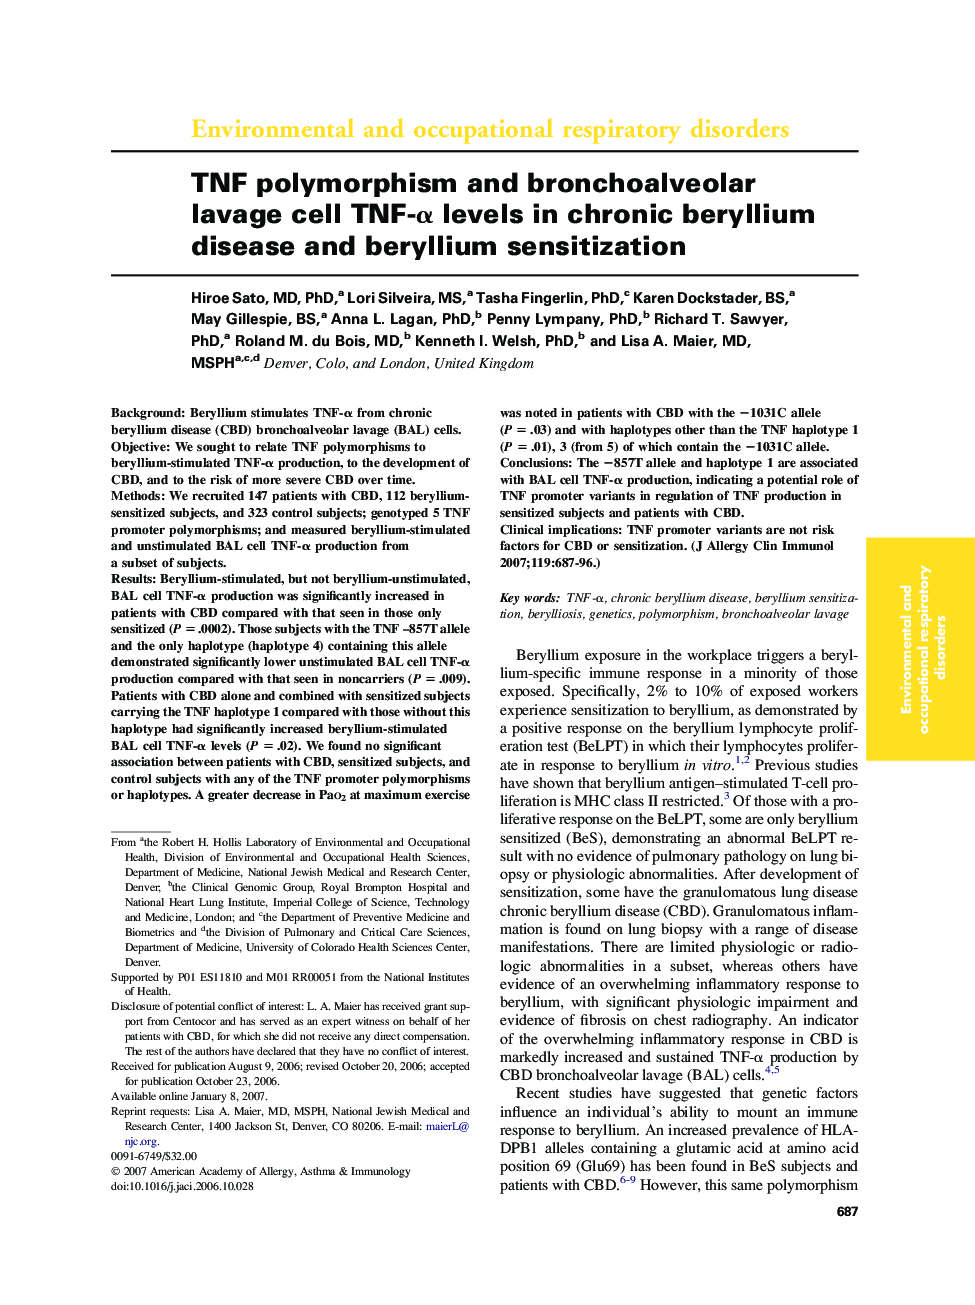 TNF polymorphism and bronchoalveolar lavage cell TNF-α levels in chronic beryllium disease and beryllium sensitization 